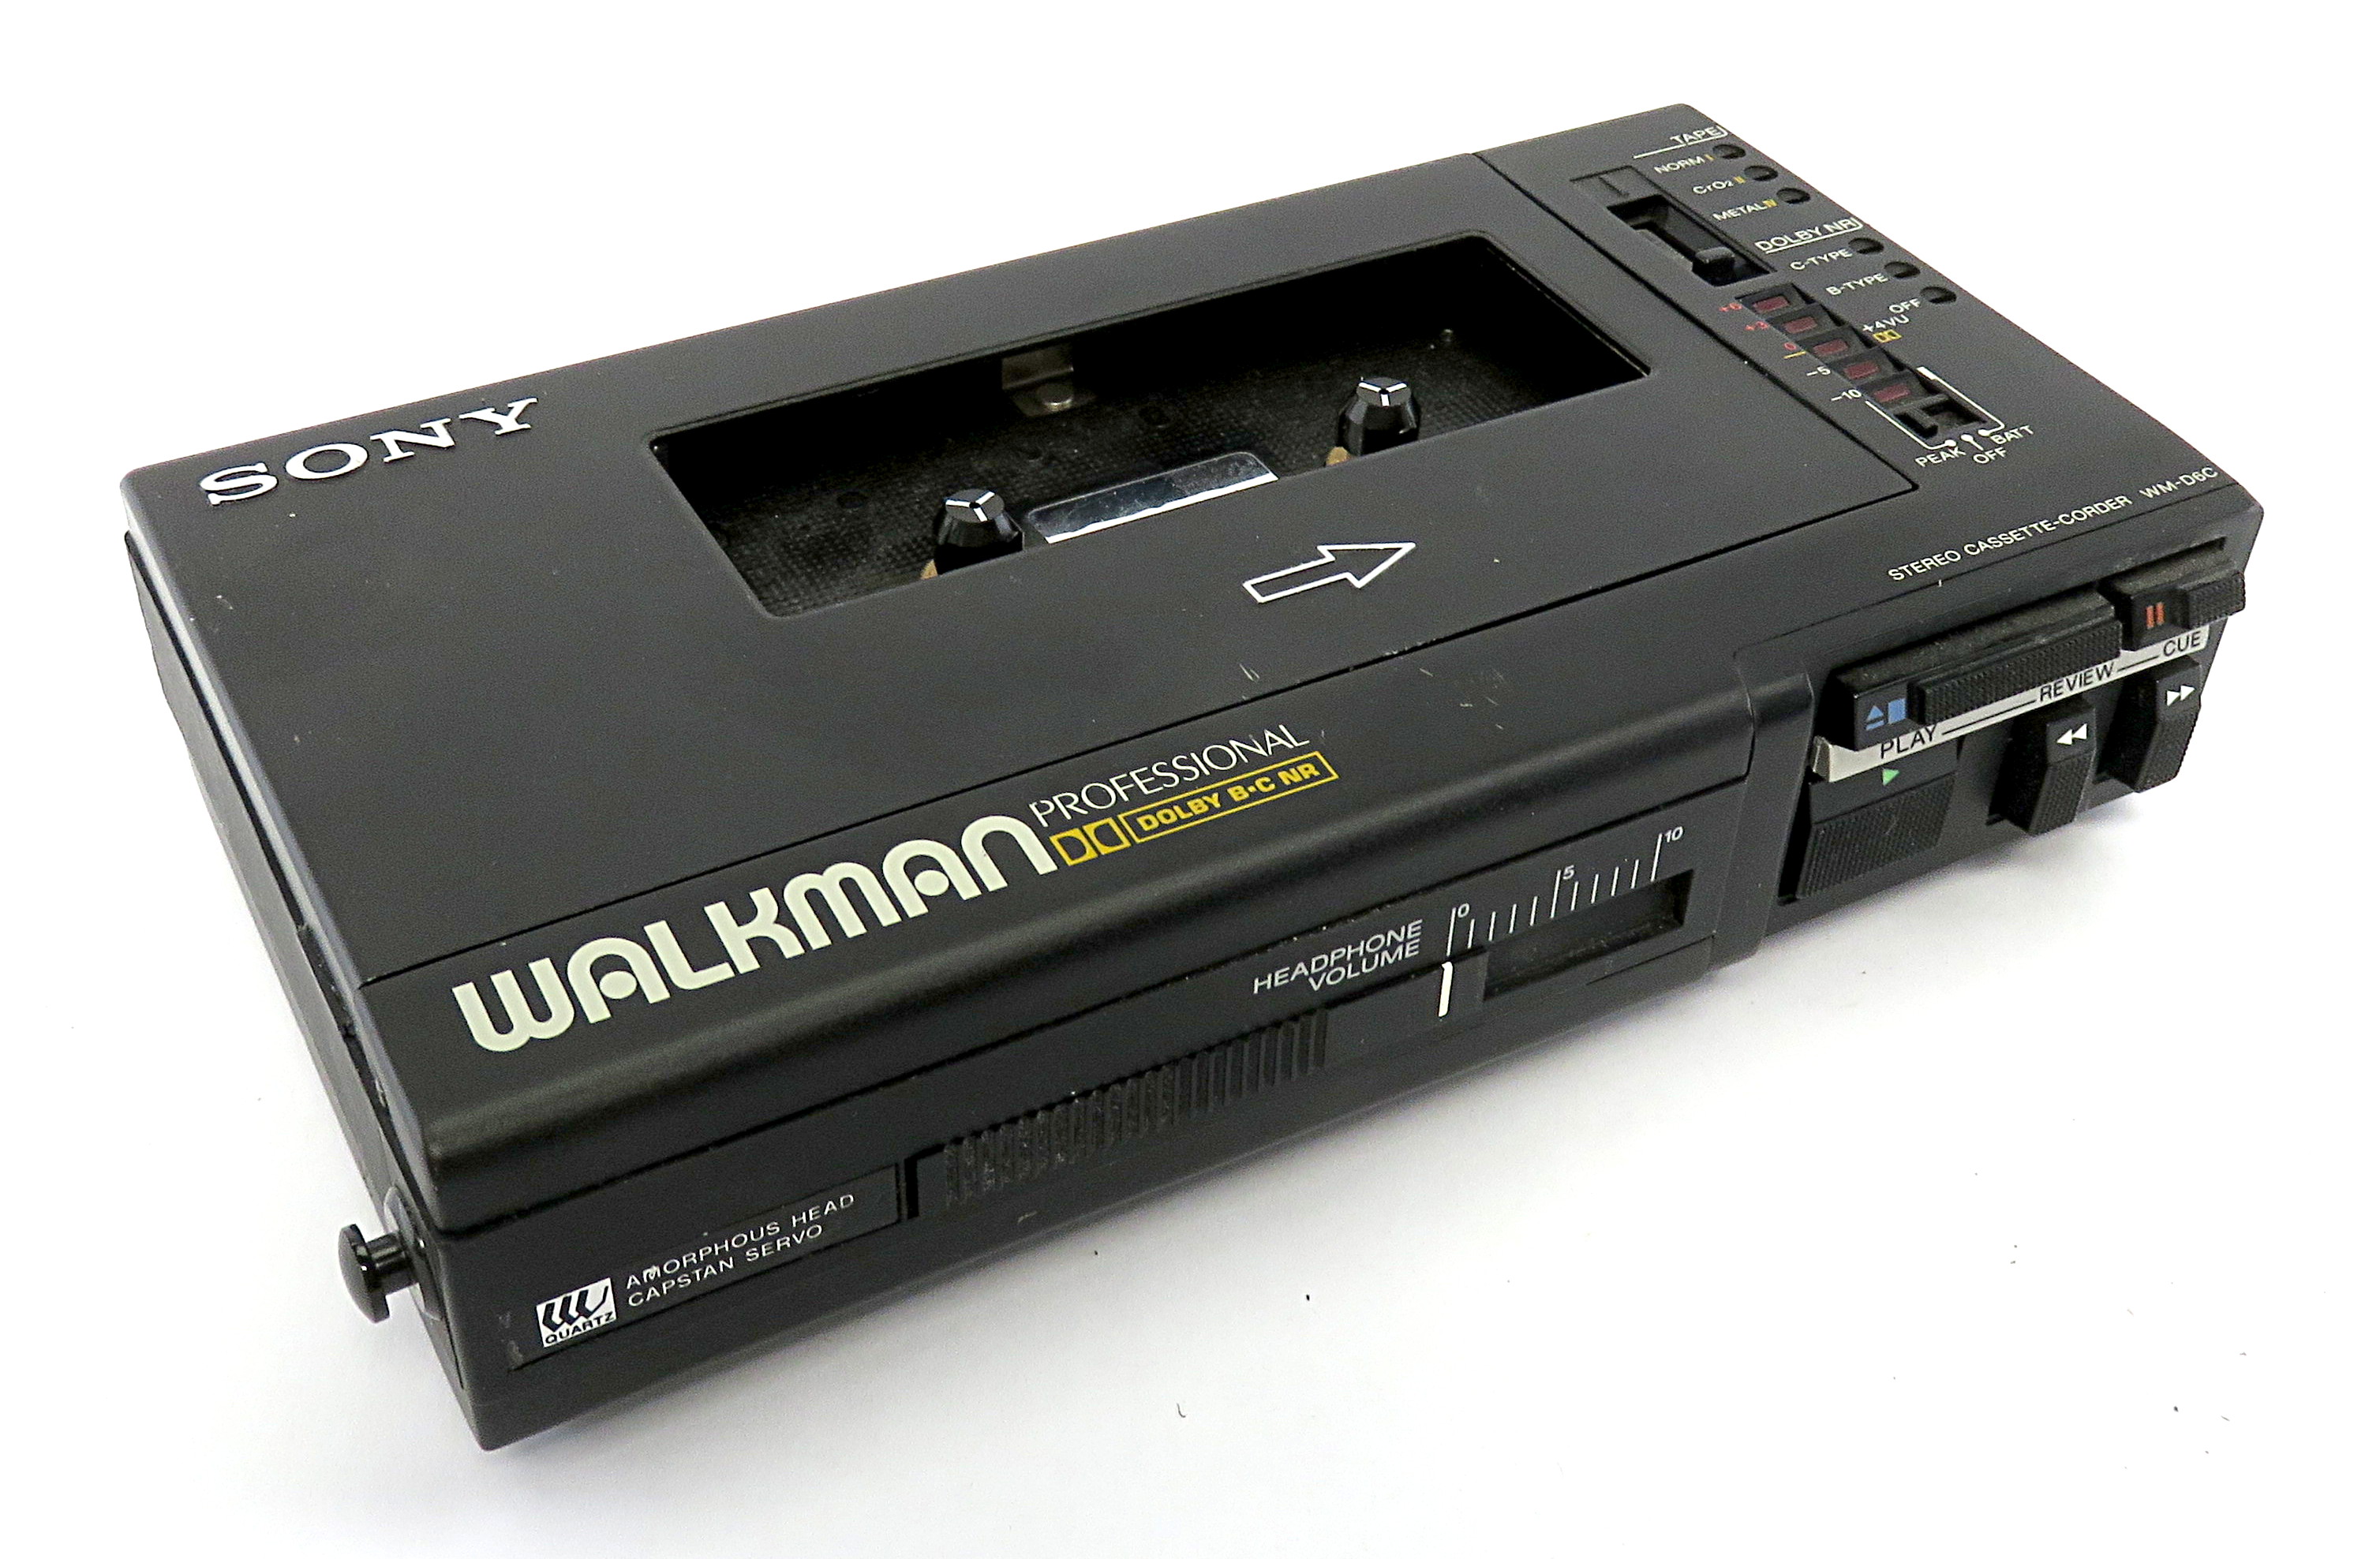 The Sony D6C Professional Walkman